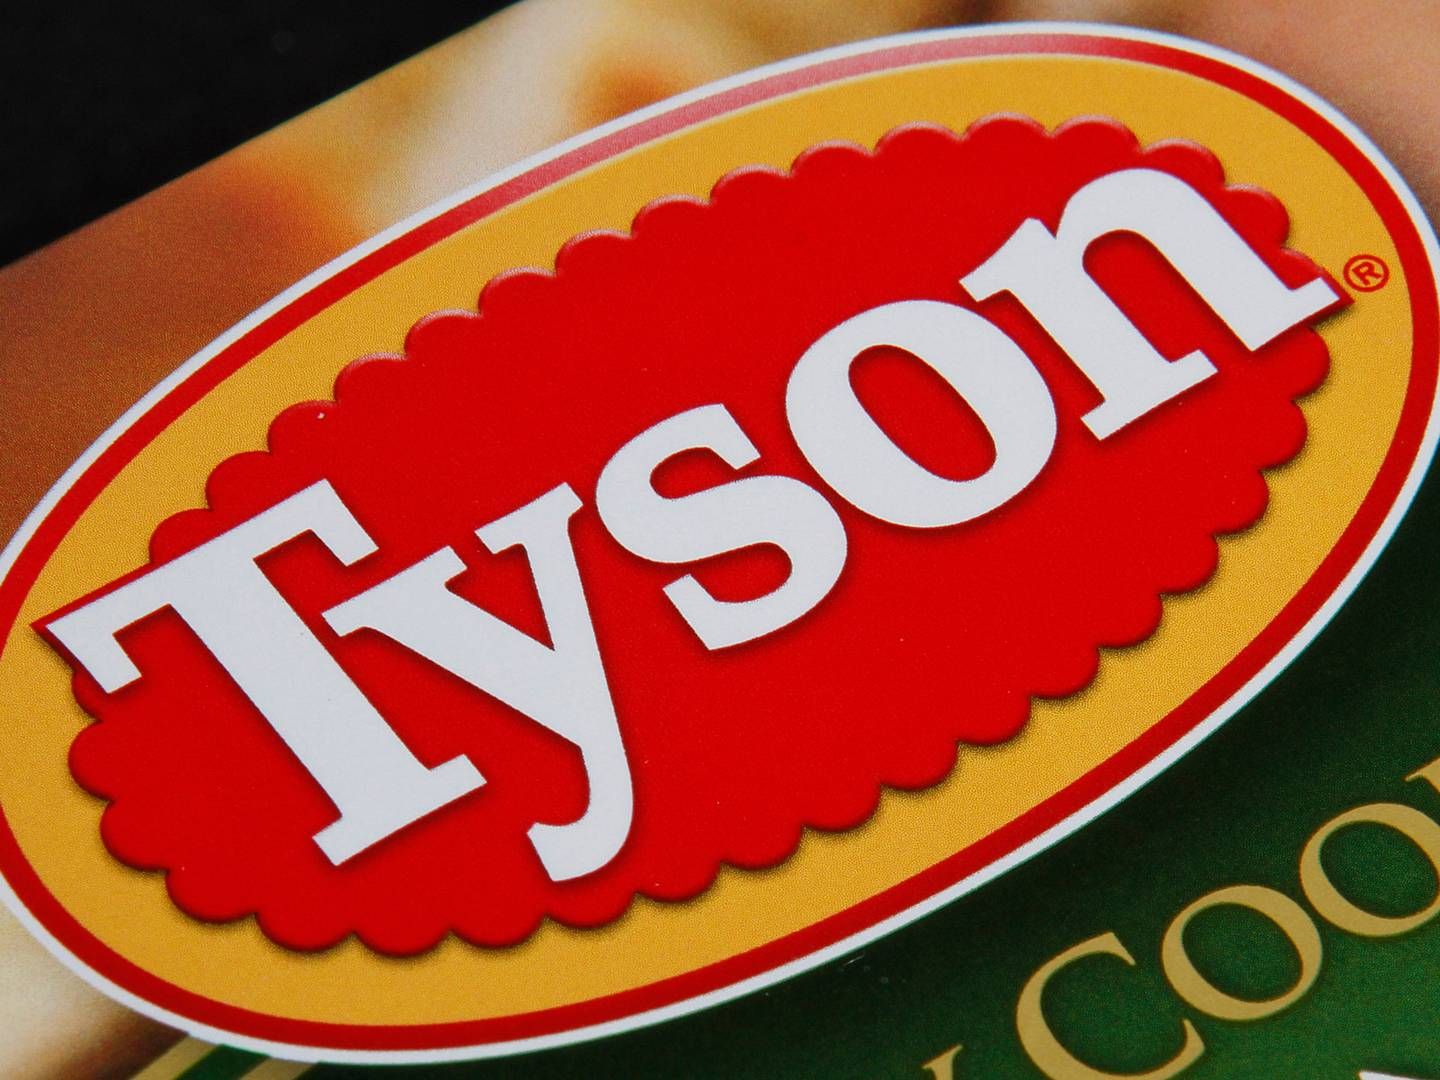 Tyson lukker kyllingeproduktionen ned flere steder i Missouri. Arkivfoto. | Foto: Toby Talbot/AP/Ritzau Scanpix